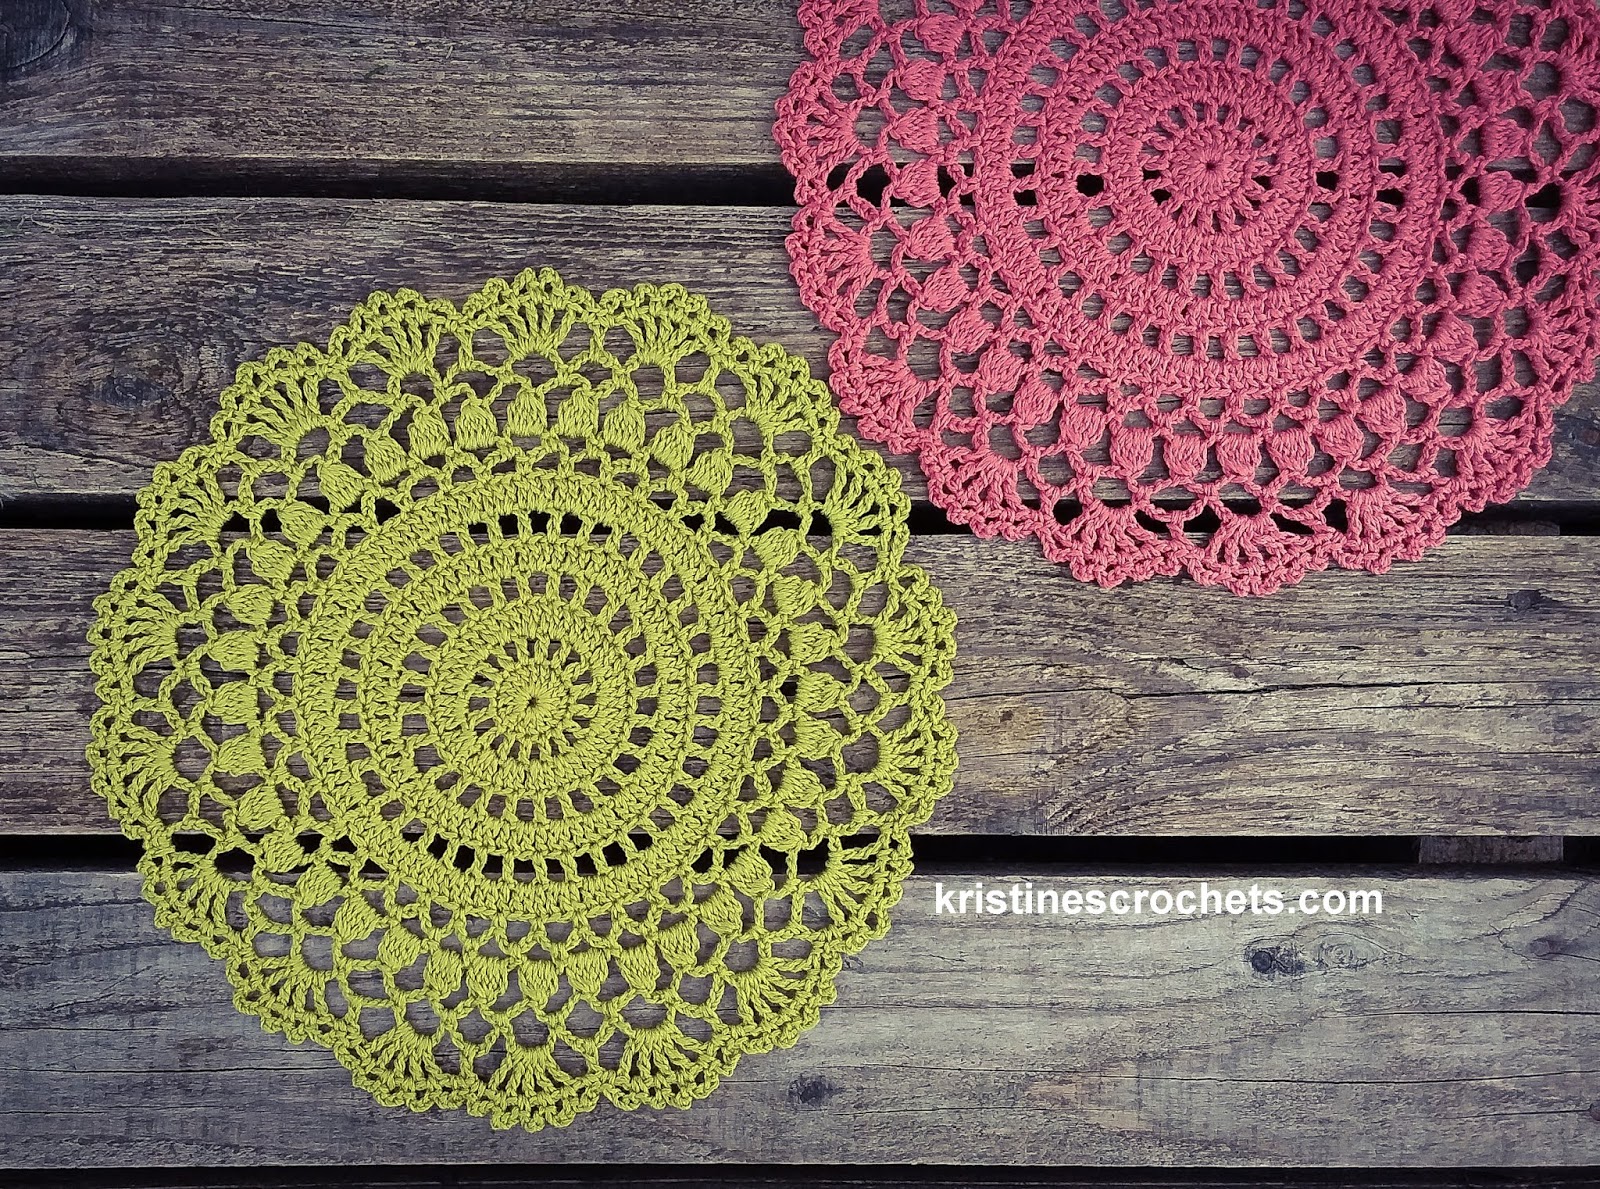 kristinescrochets-round-lace-doily-easy-crochet-pattern